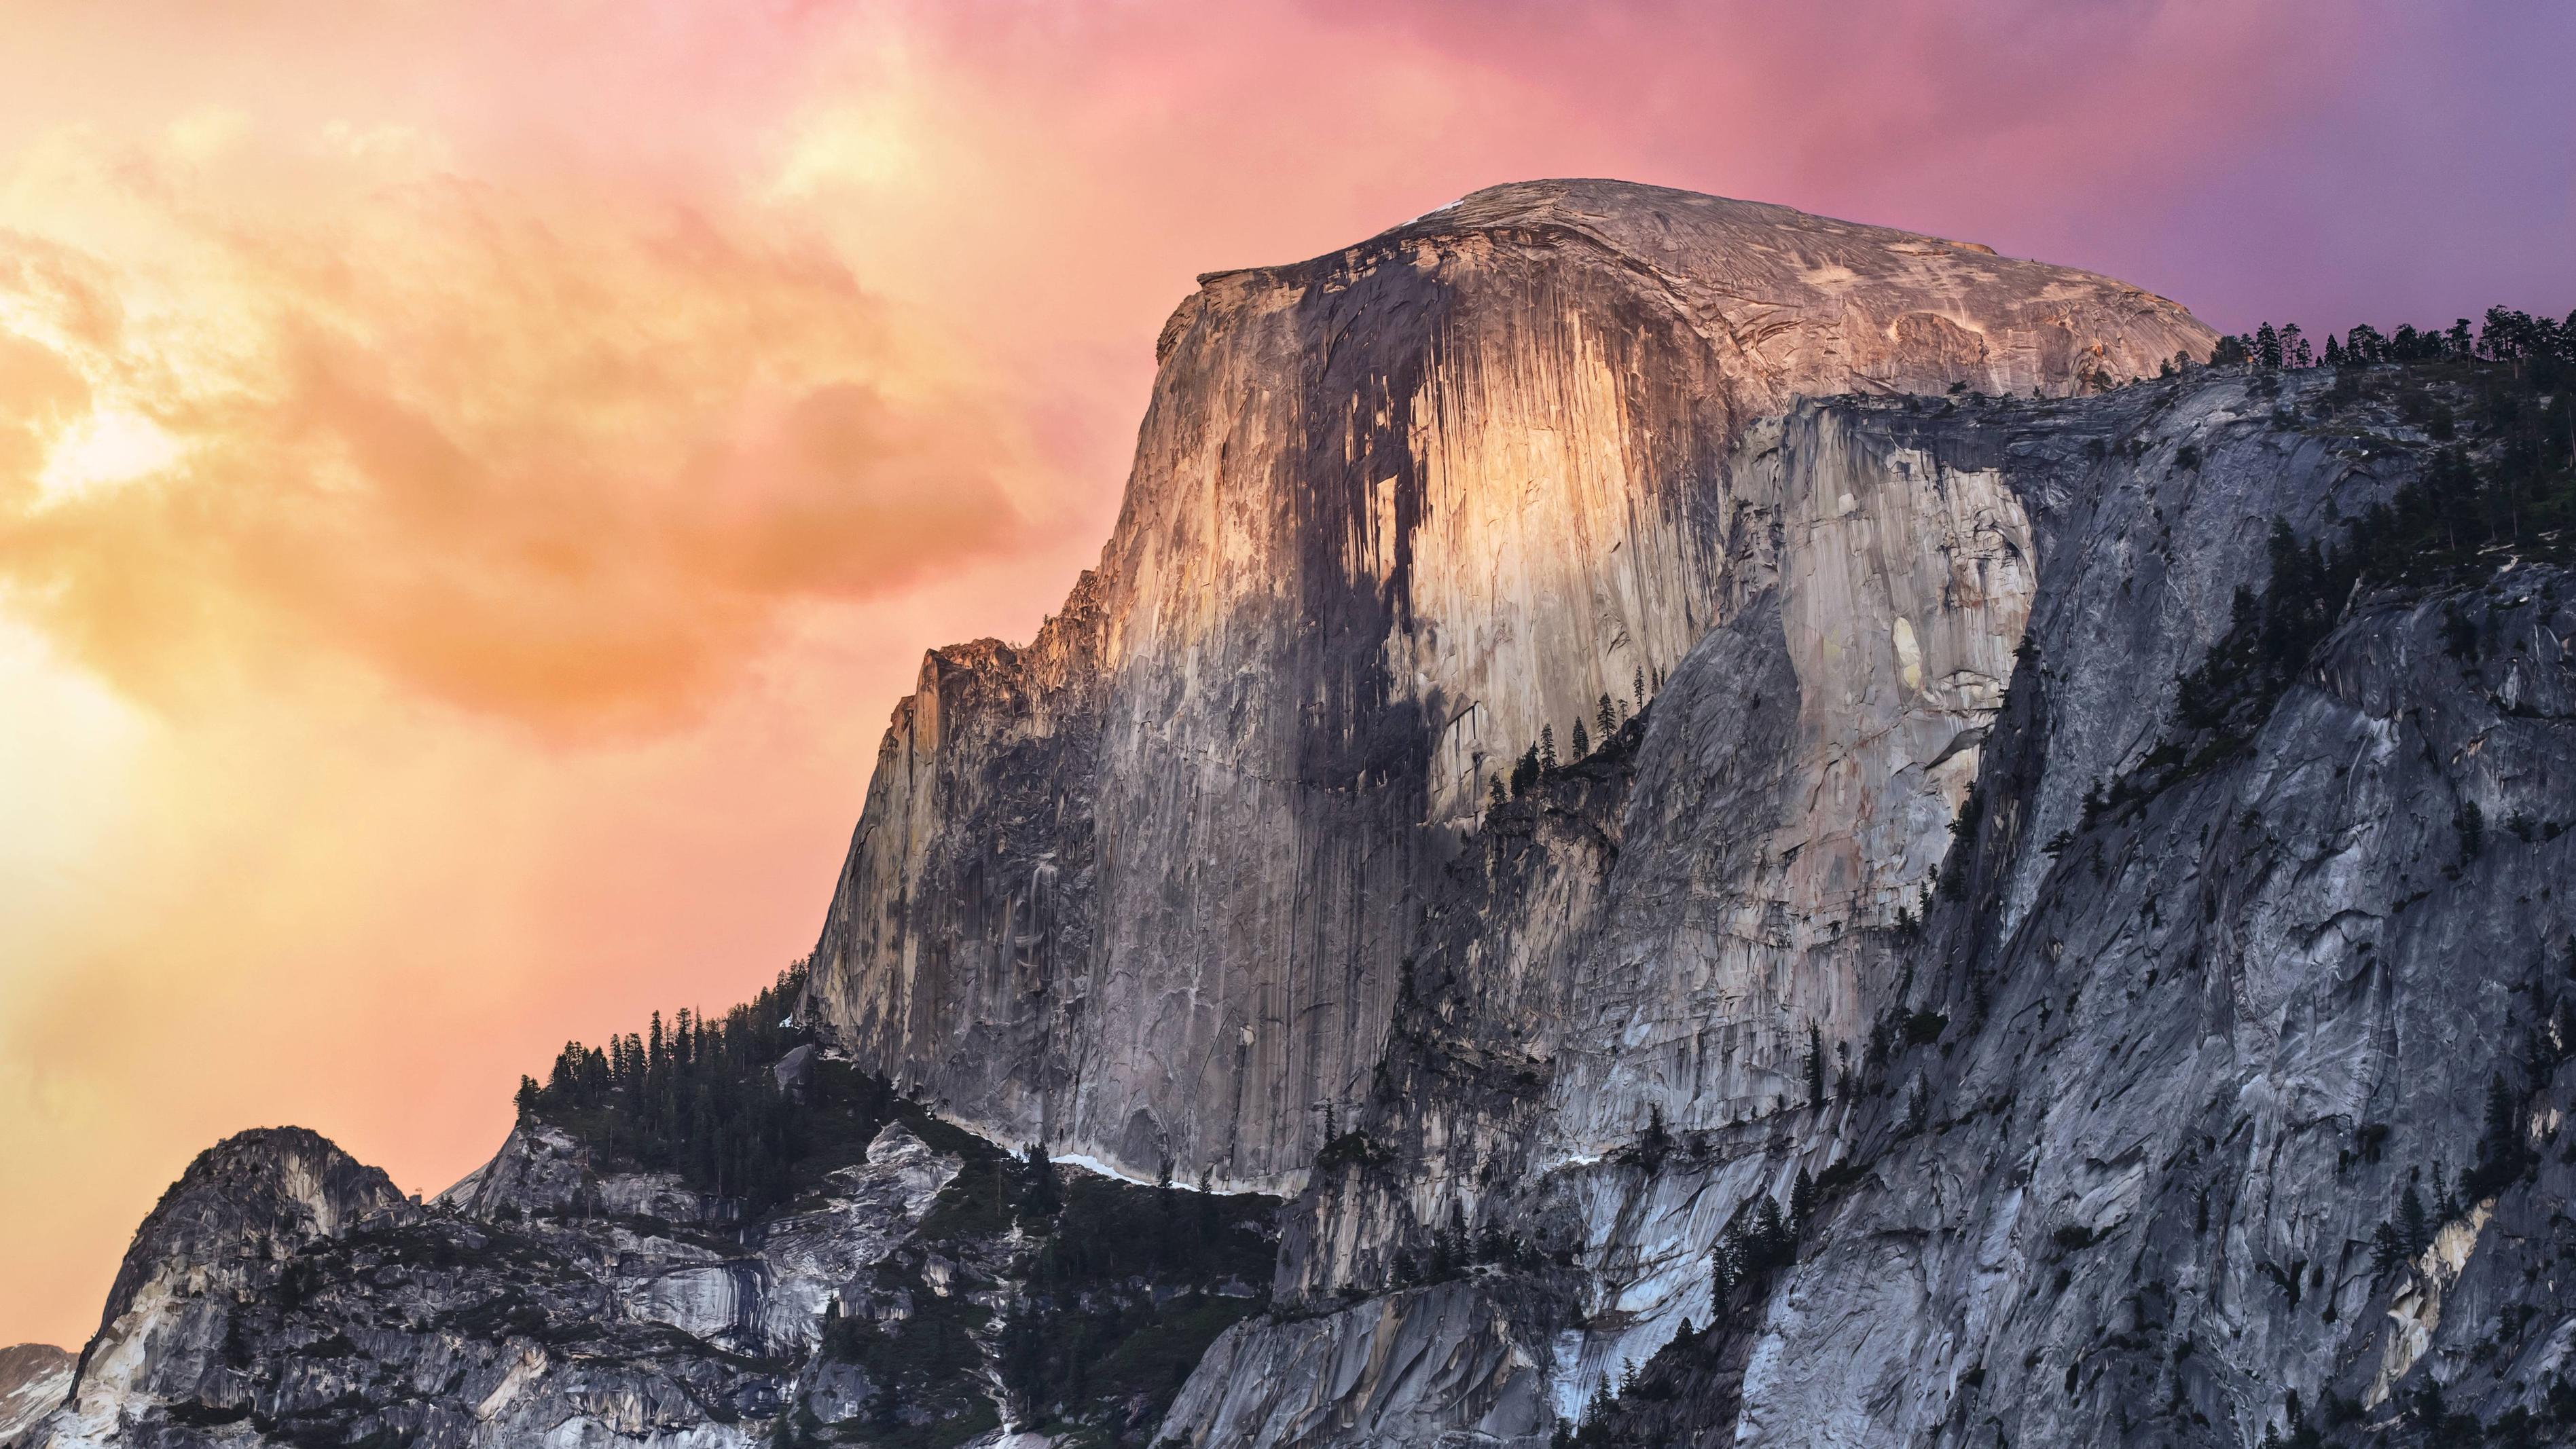 Apple Mac OS X Yosemite Wallpaper by cjchristianjoel on